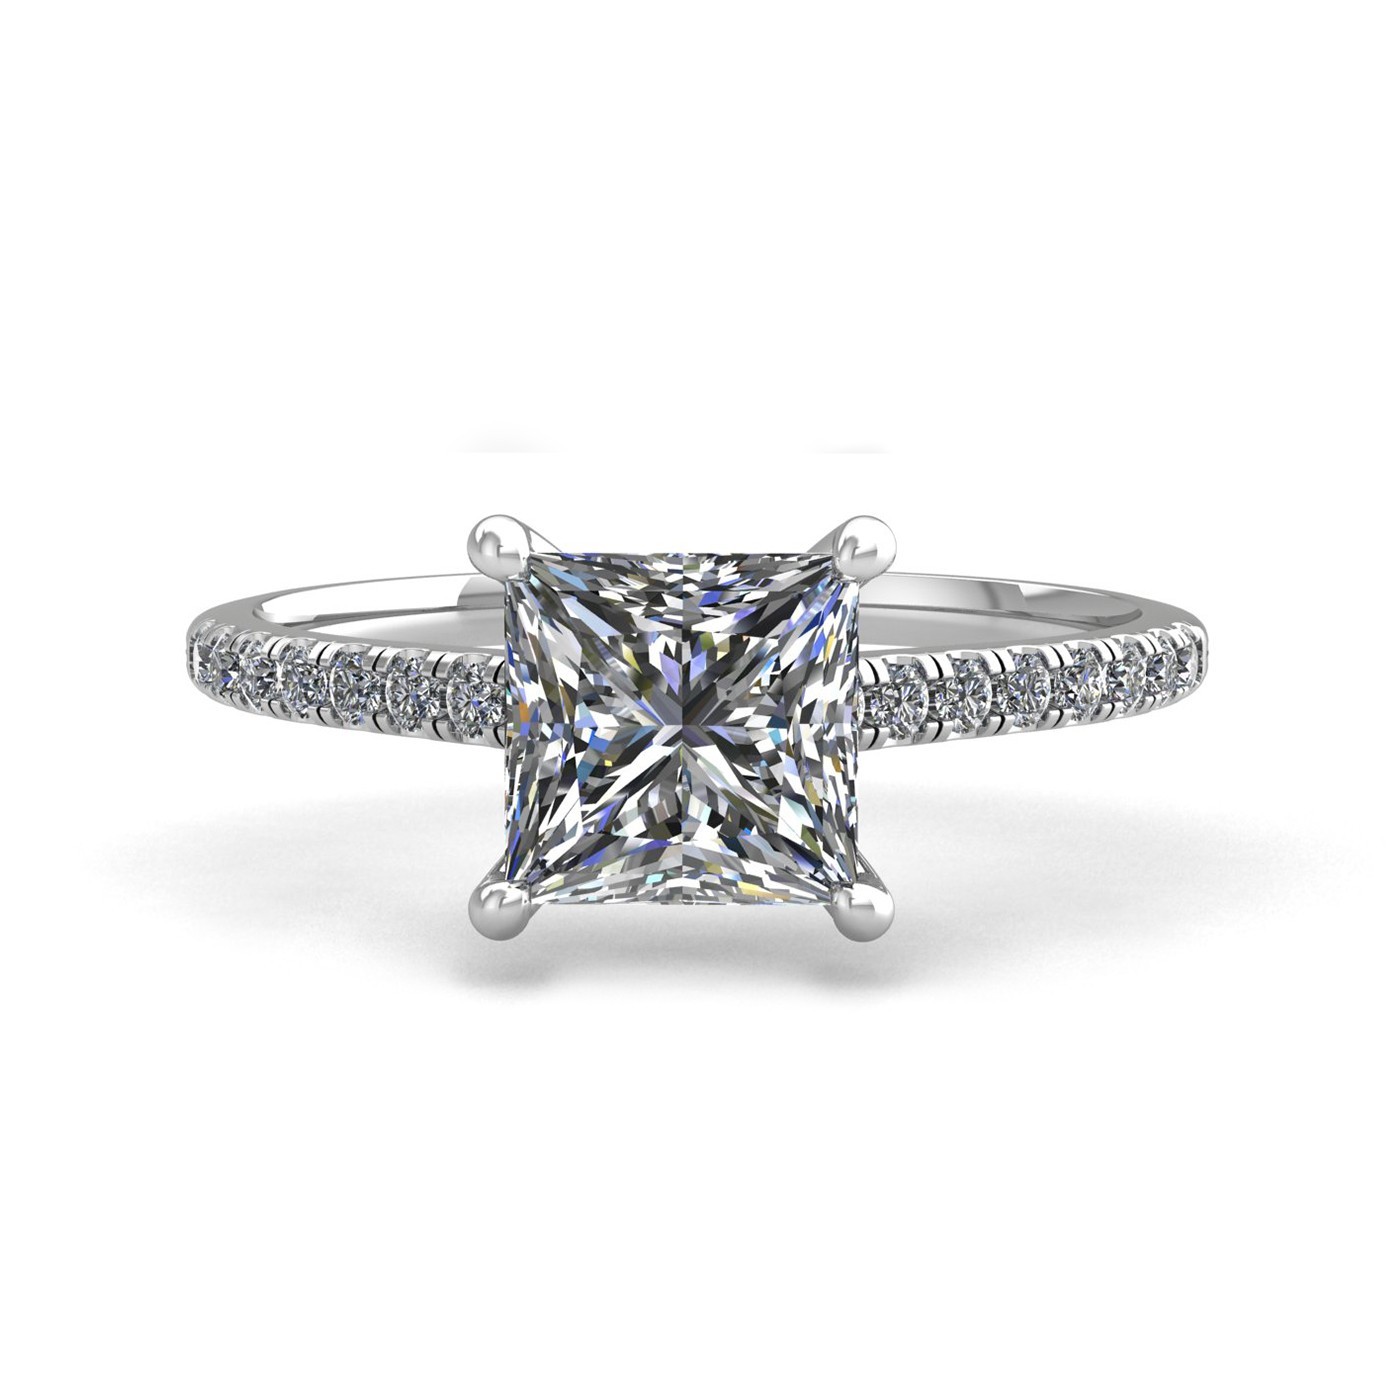 18k white gold 1,20 ct 4 prongs princess cut diamond engagement ring with whisper thin pavÉ set band